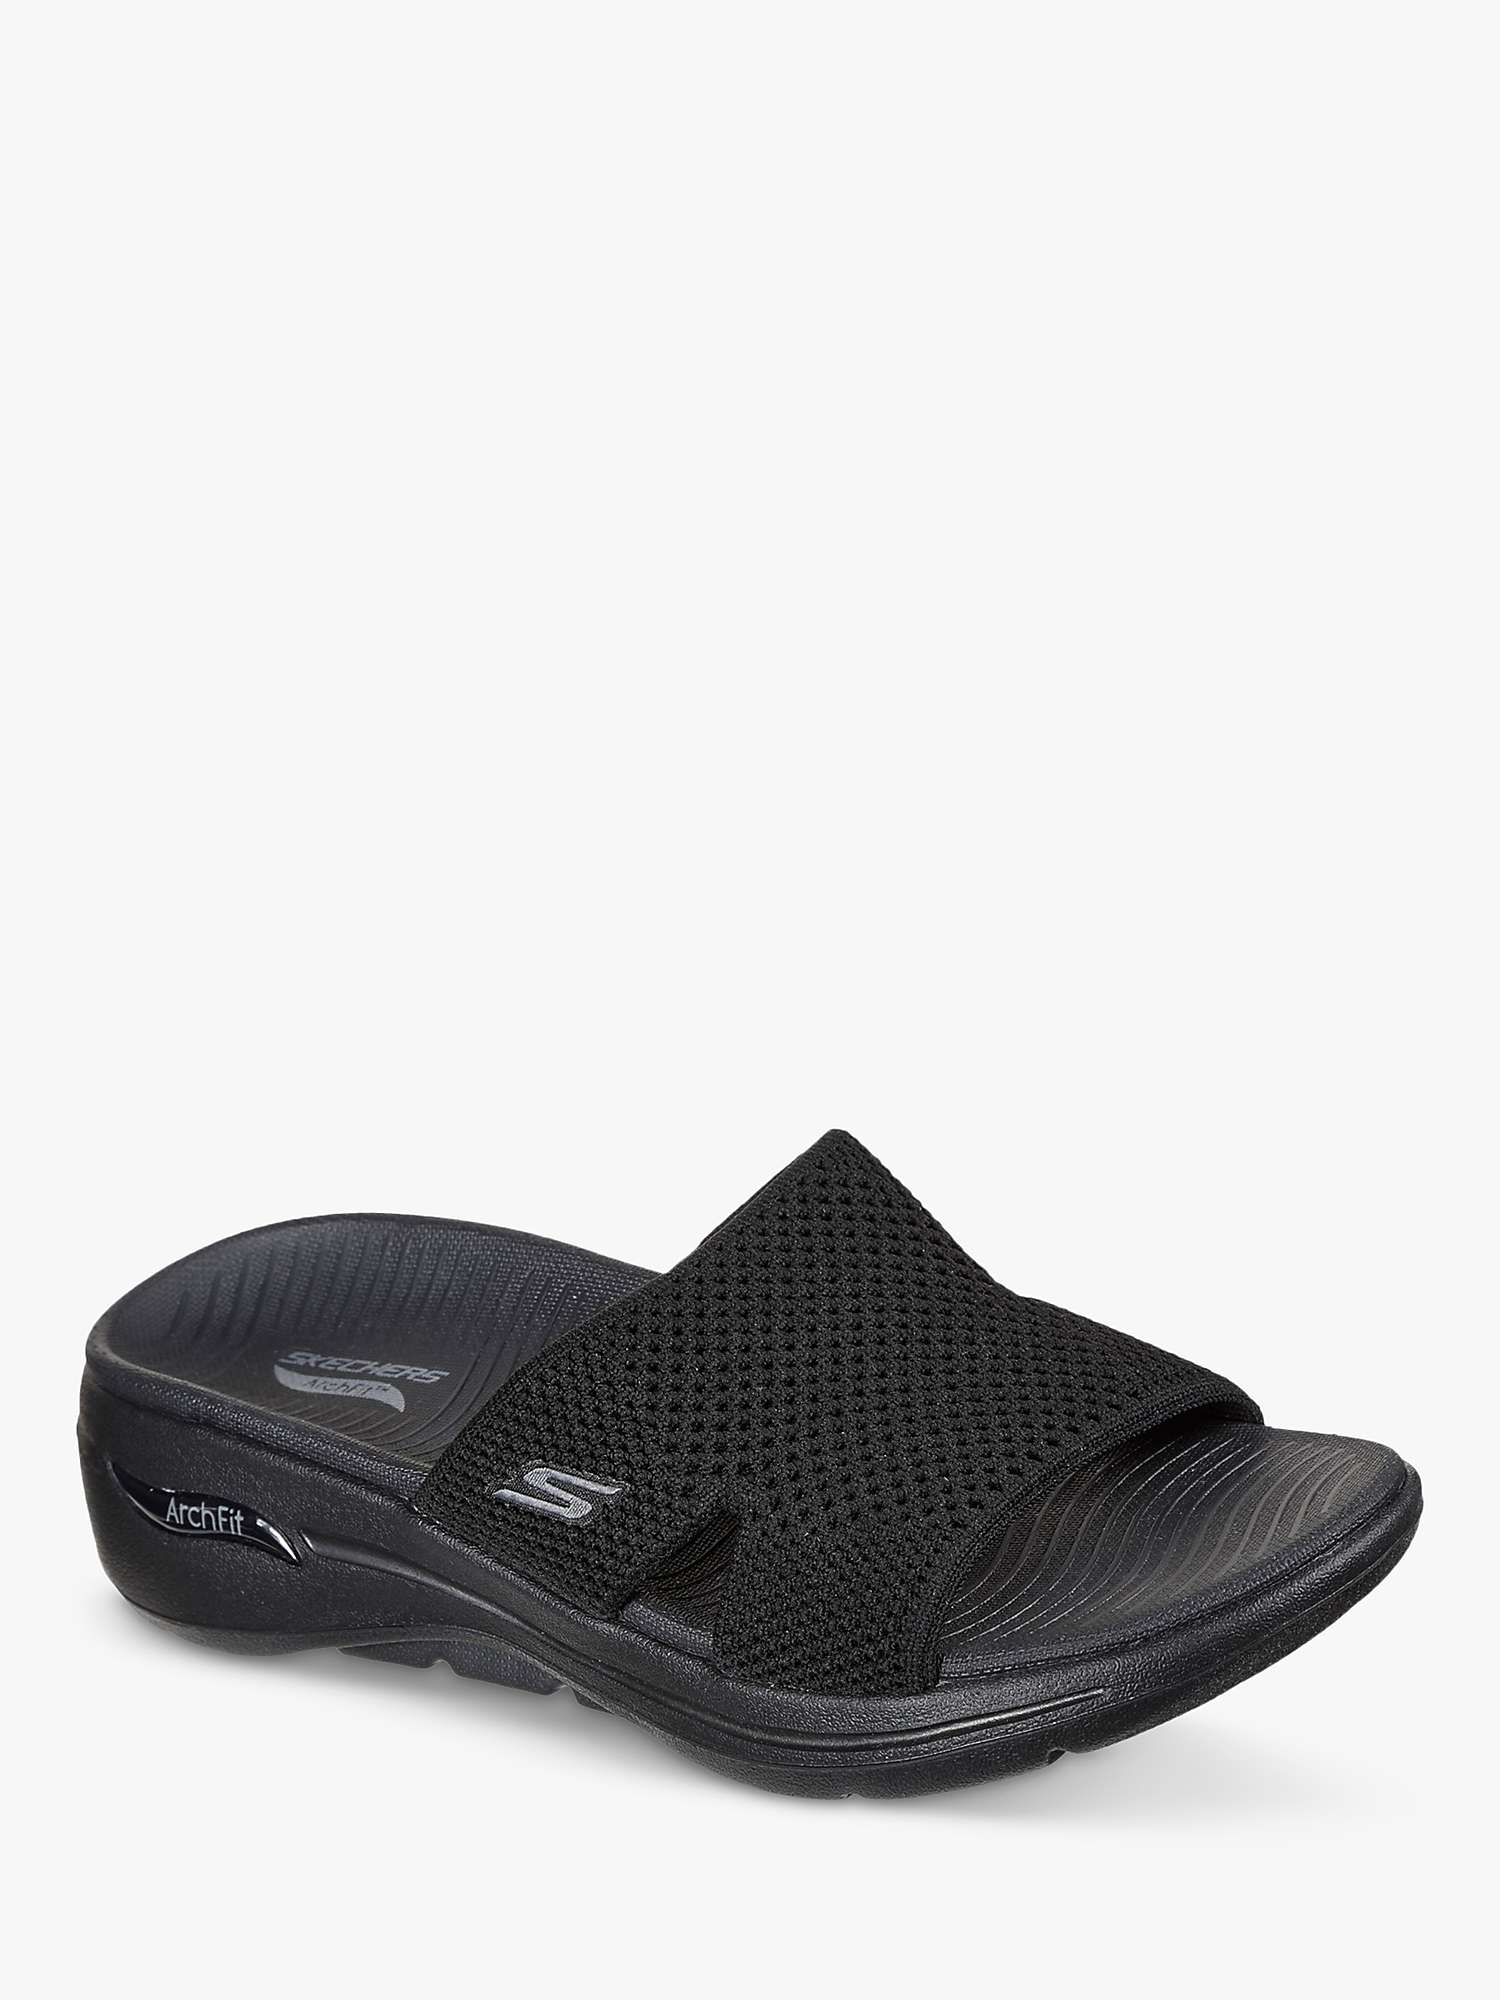 Buy Skechers Go Walk Arch Fit Worthy Summer Sandals Online at johnlewis.com